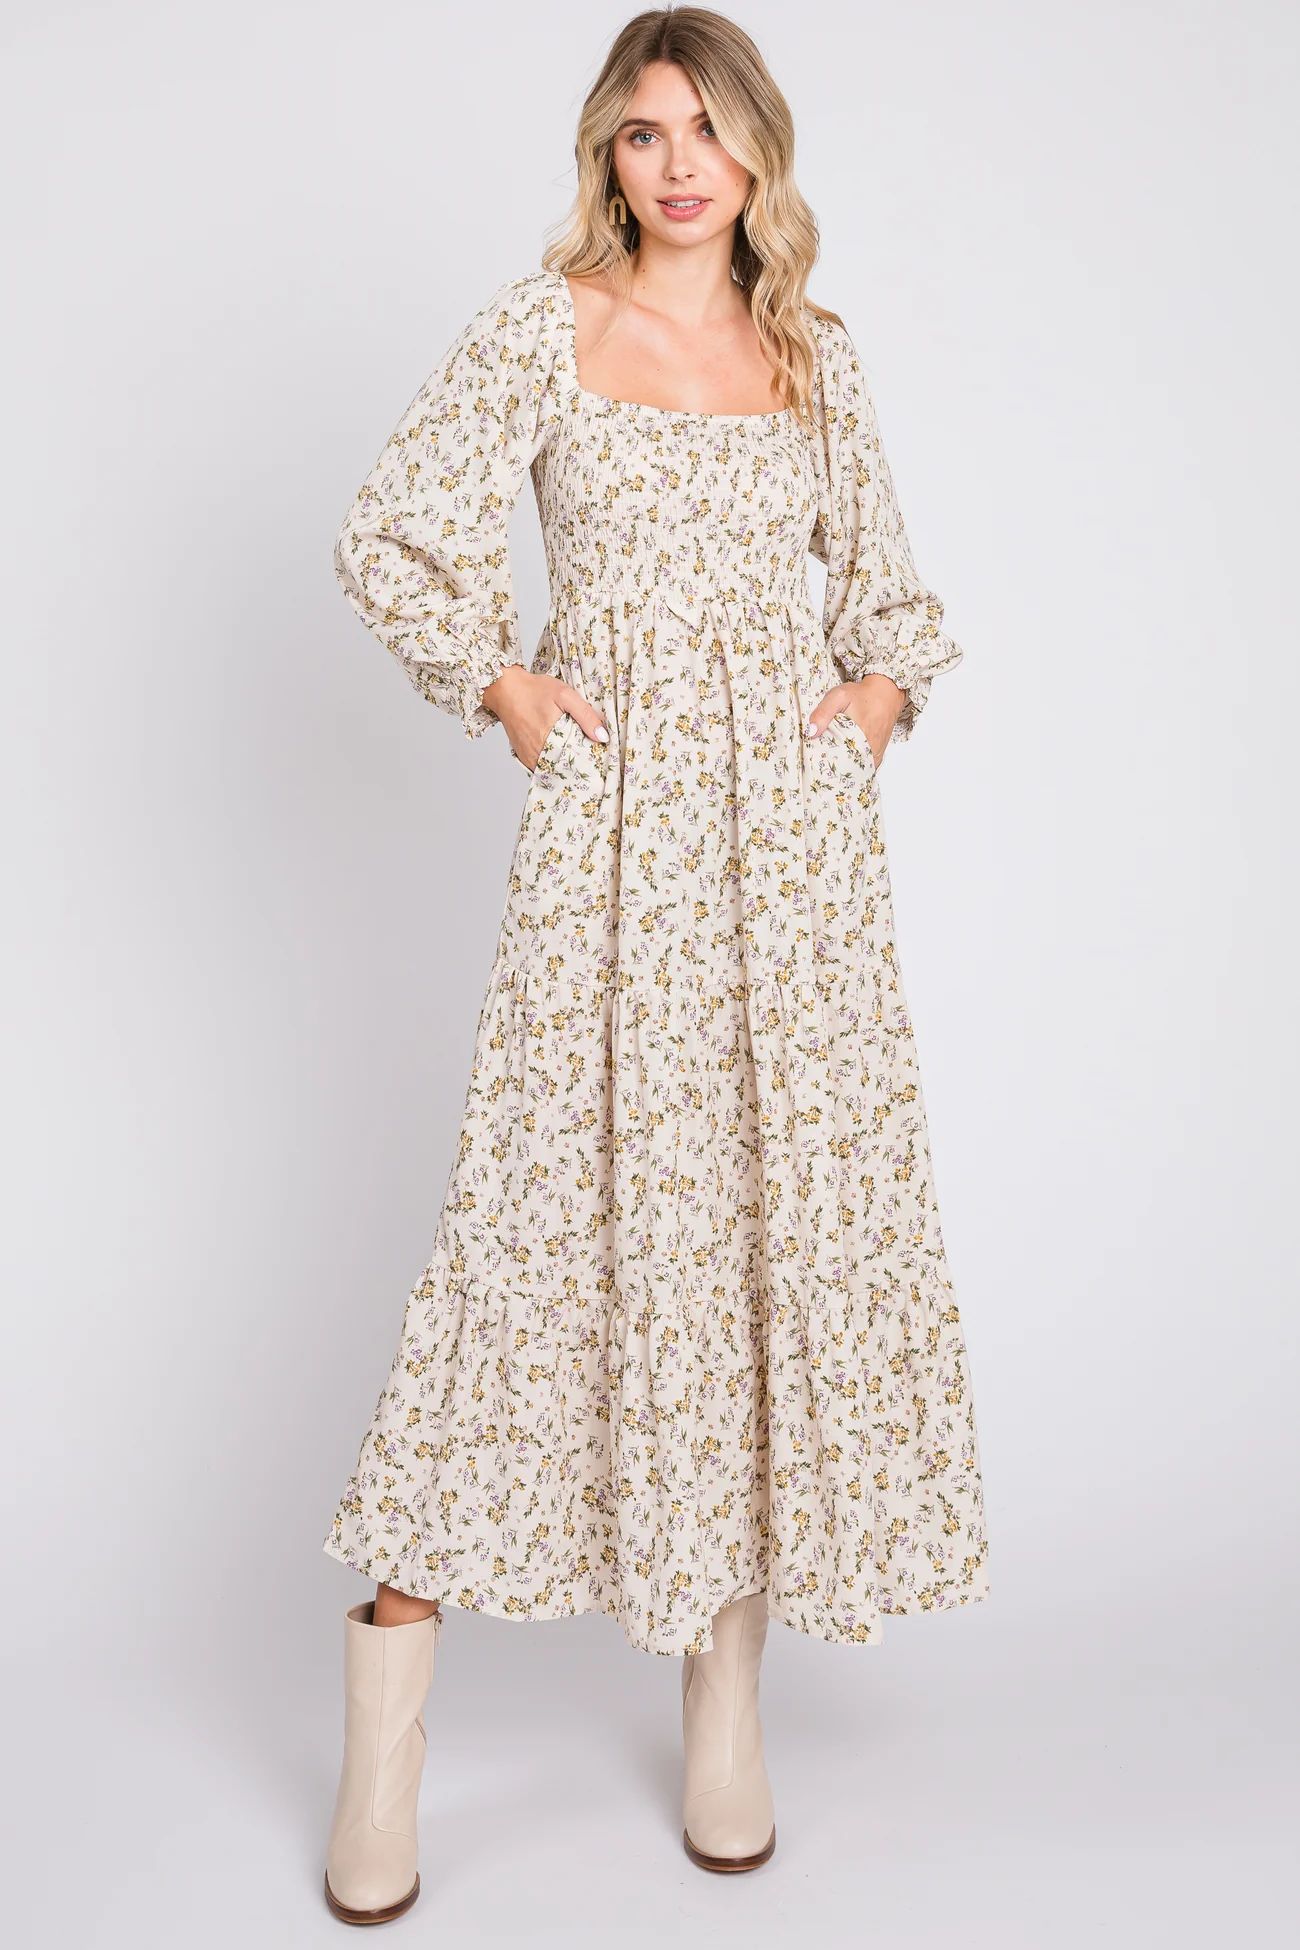 Cream Floral Smocked Long Sleeve Maxi Dress | PinkBlush Maternity